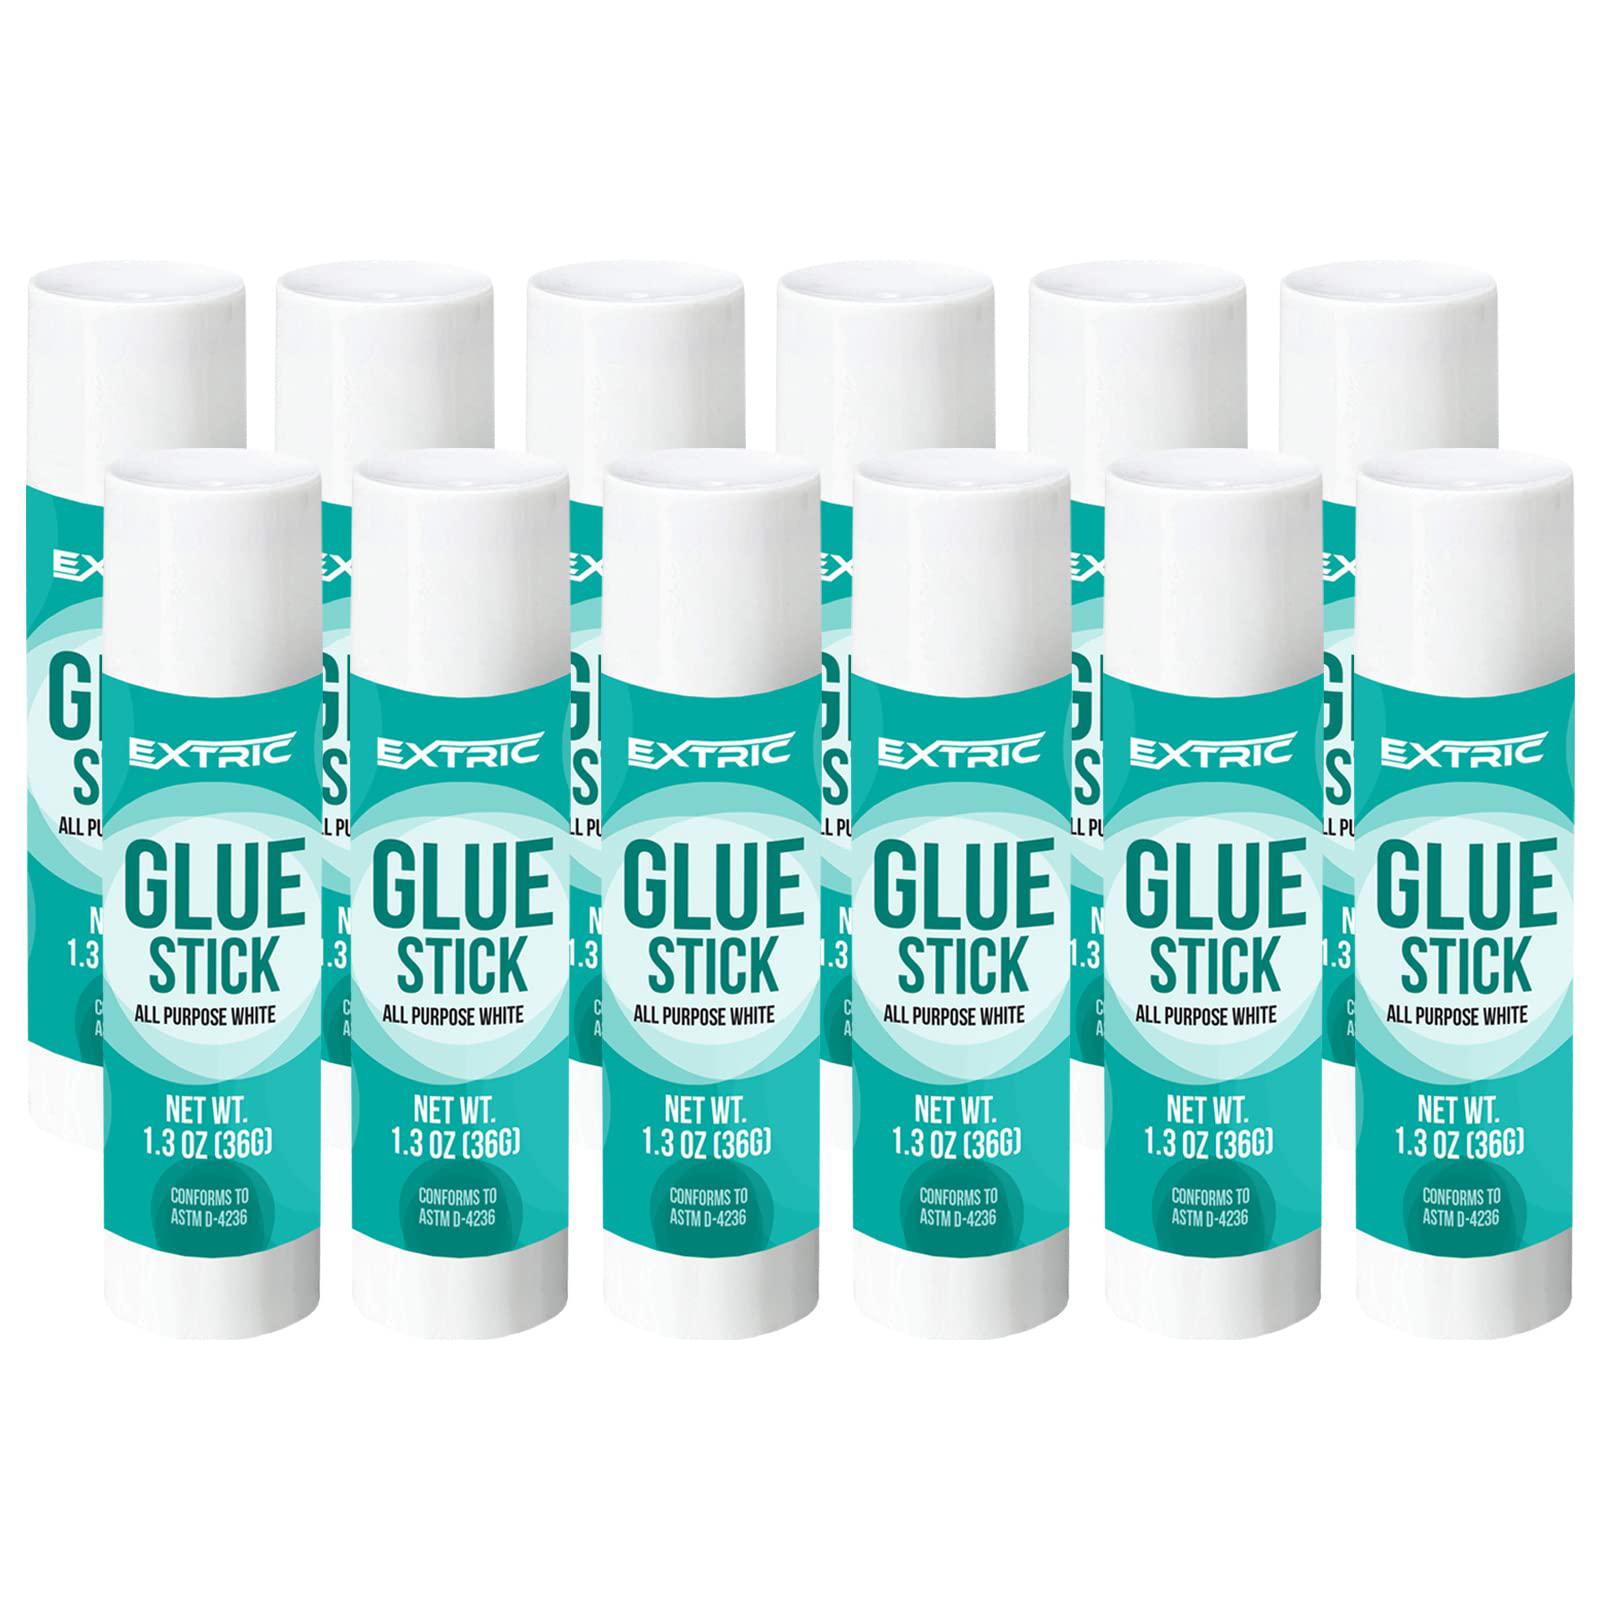 EXTRIc glue sticks 1.3 ounce - 12 count glue stick, all purpose white glue  sticks for kids, washable glue sticks bulk - large glue s